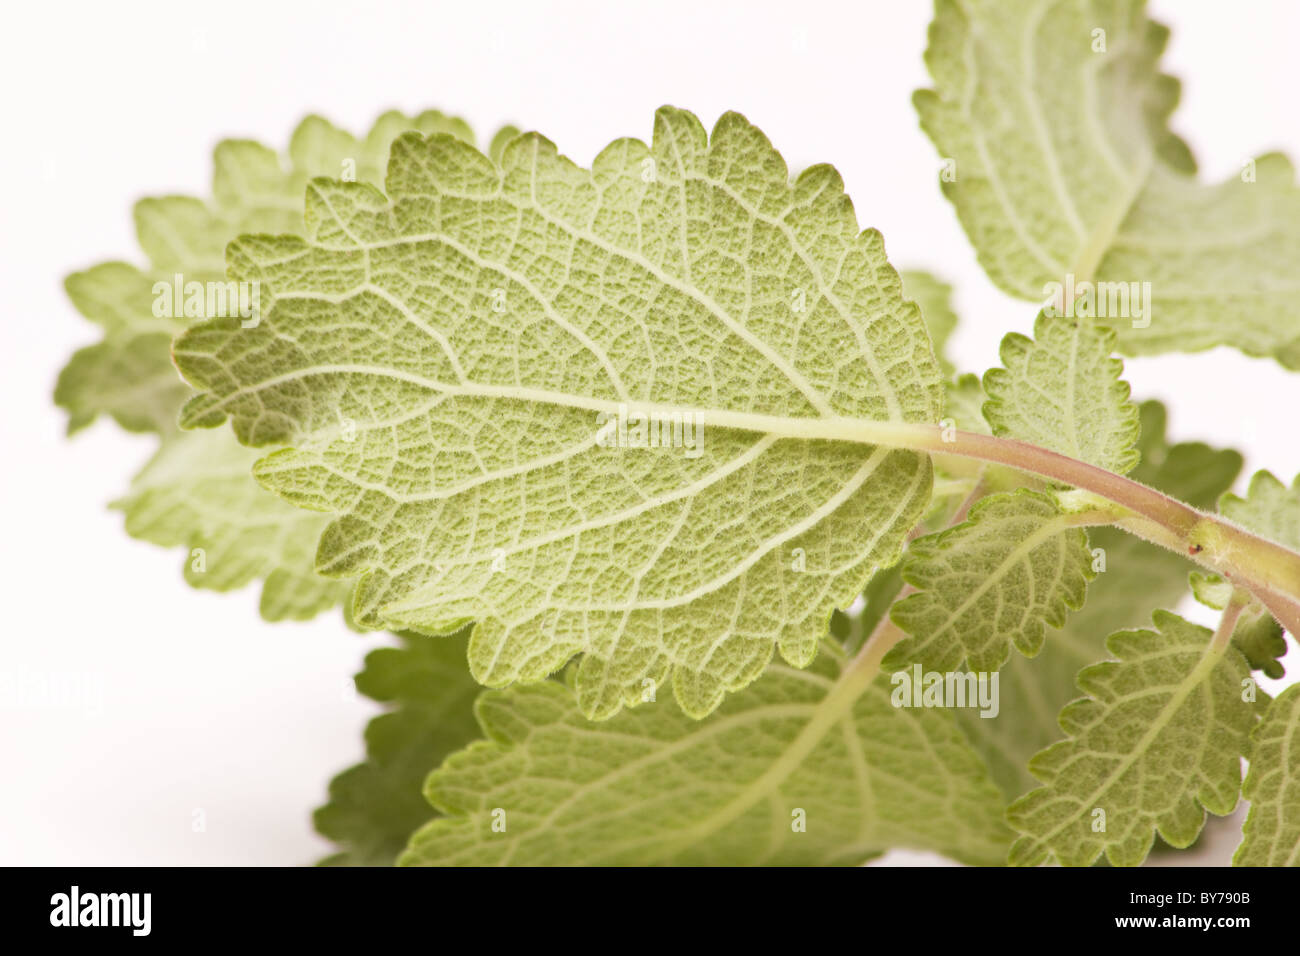 Green leaves of of Musk bush (Tetradenia riparia) cutting on white background Stock Photo